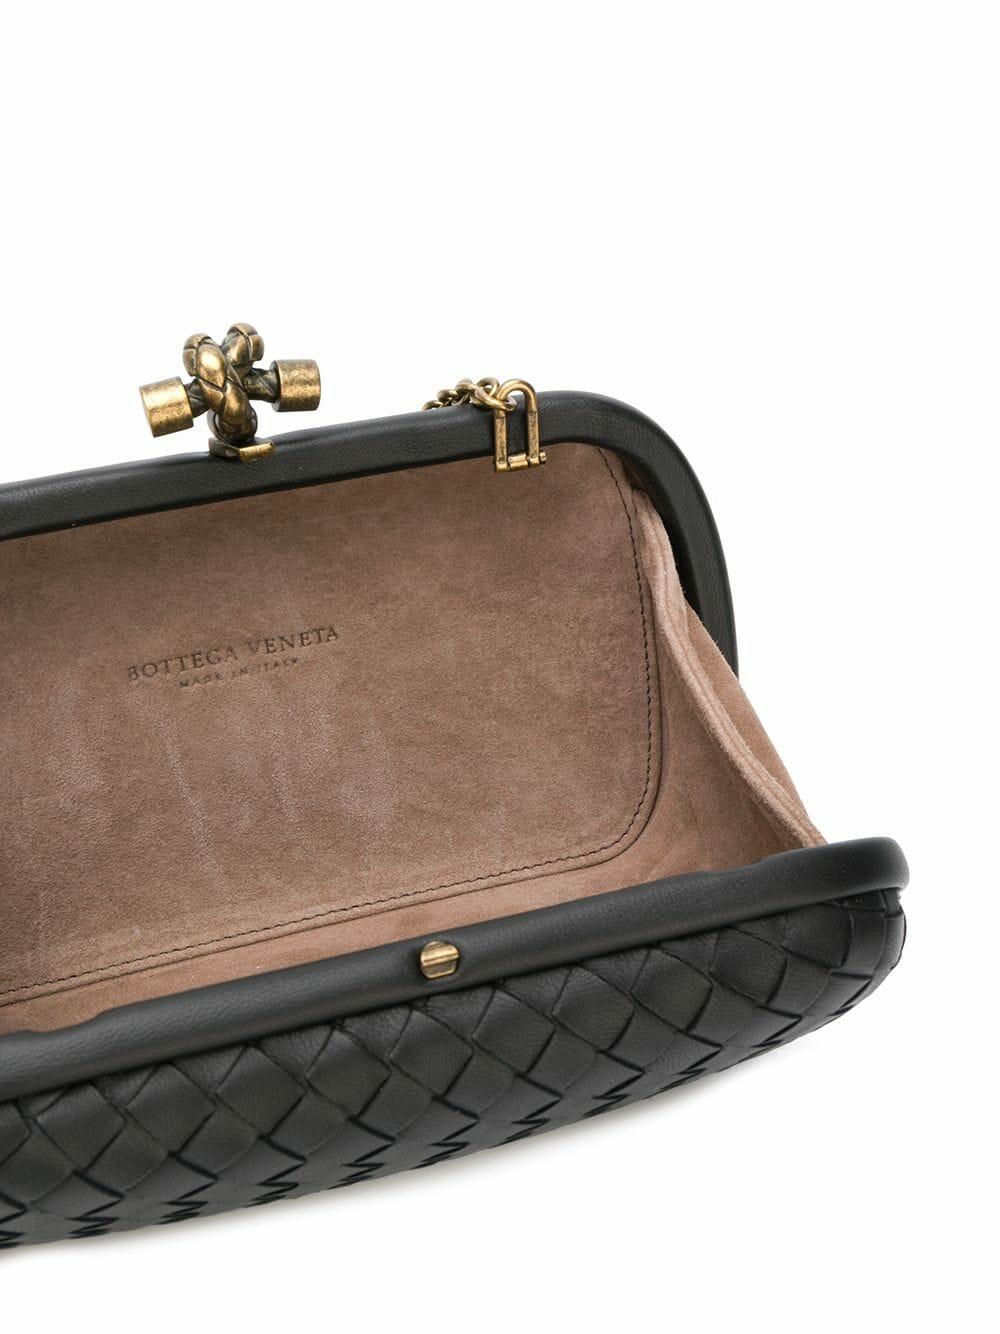 Gold Knot Intrecciato metallic-leather clutch bag, Bottega Veneta